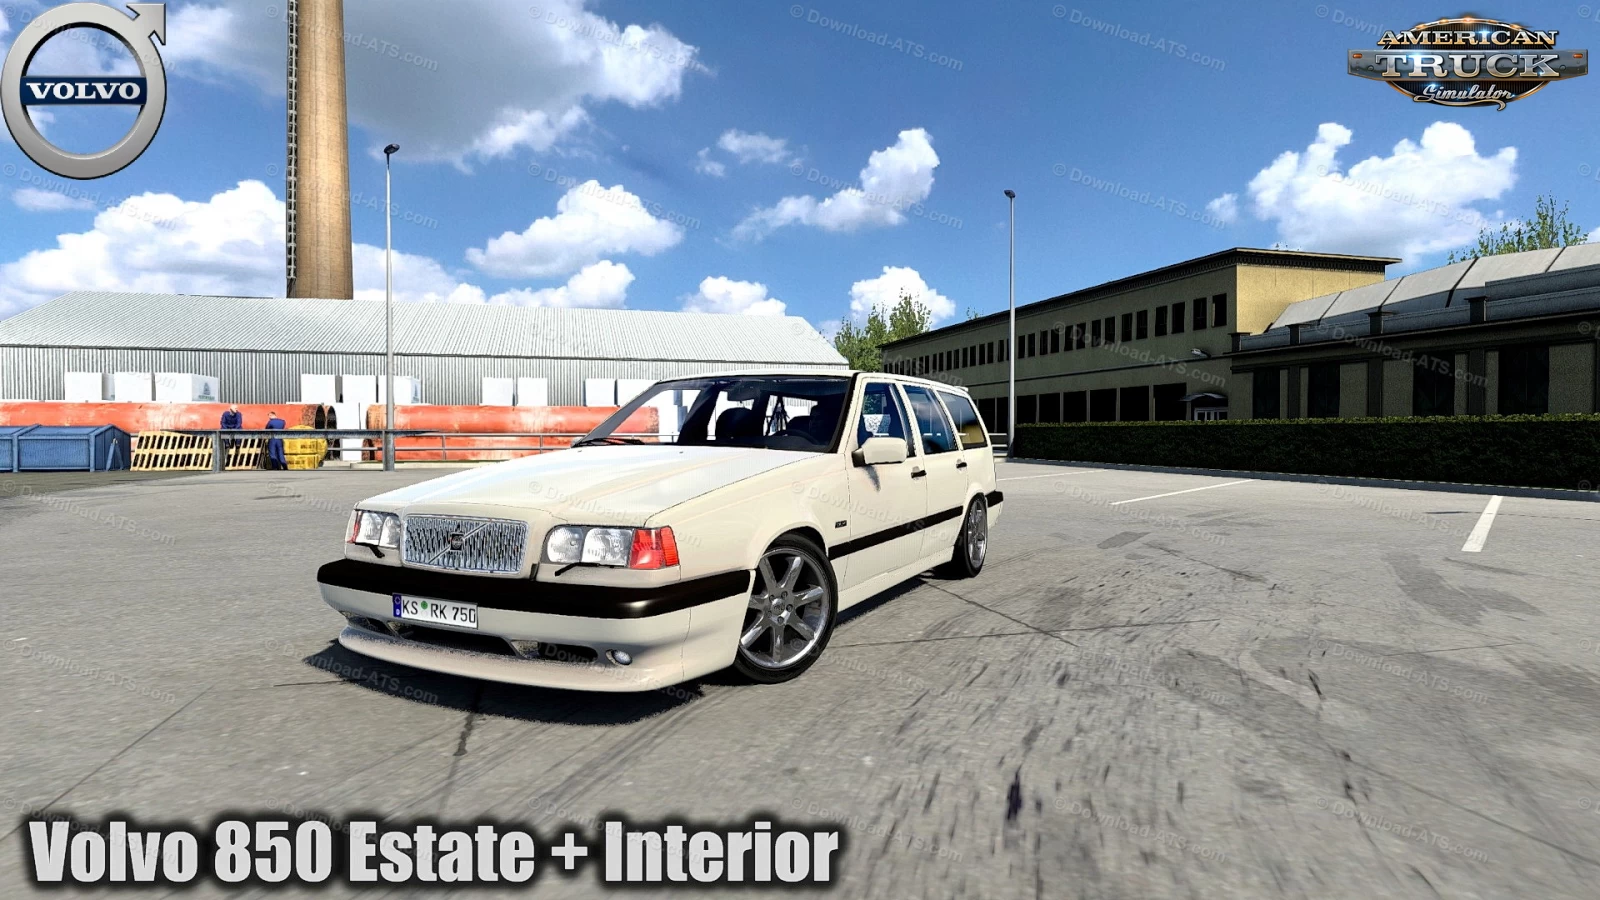 Volvo 850 Estate + Interior v2.2 (1.46.x) for ATS